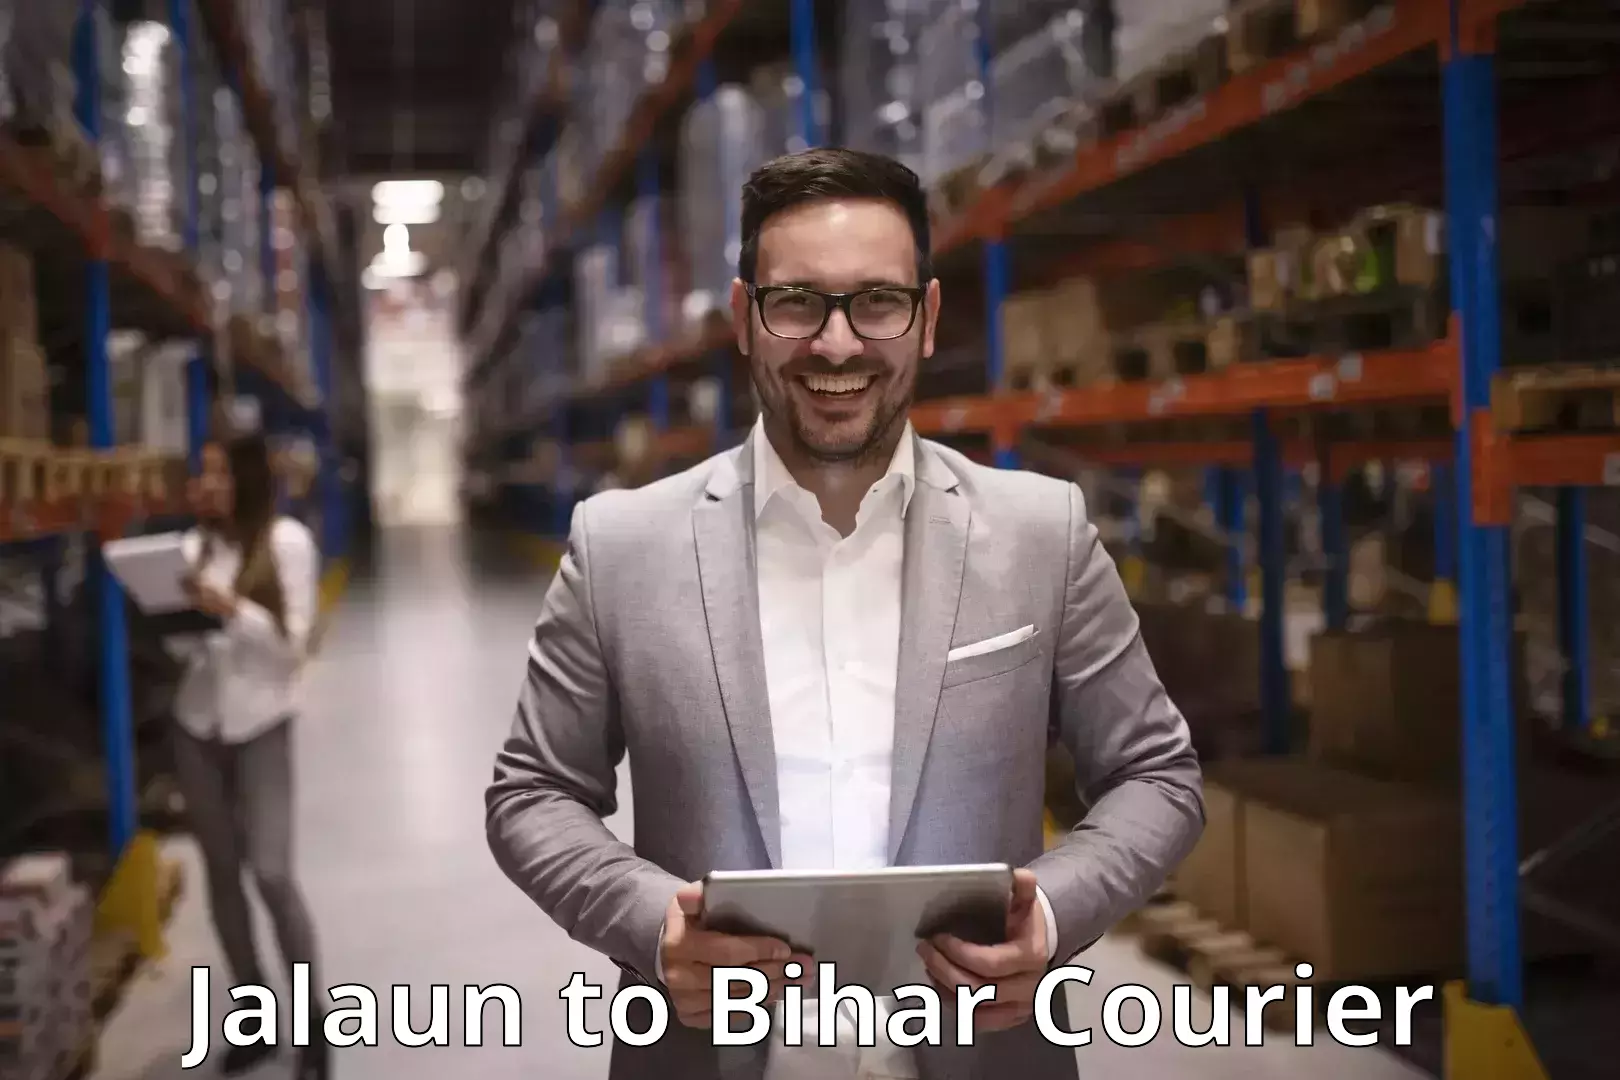 Courier service innovation Jalaun to Bihar